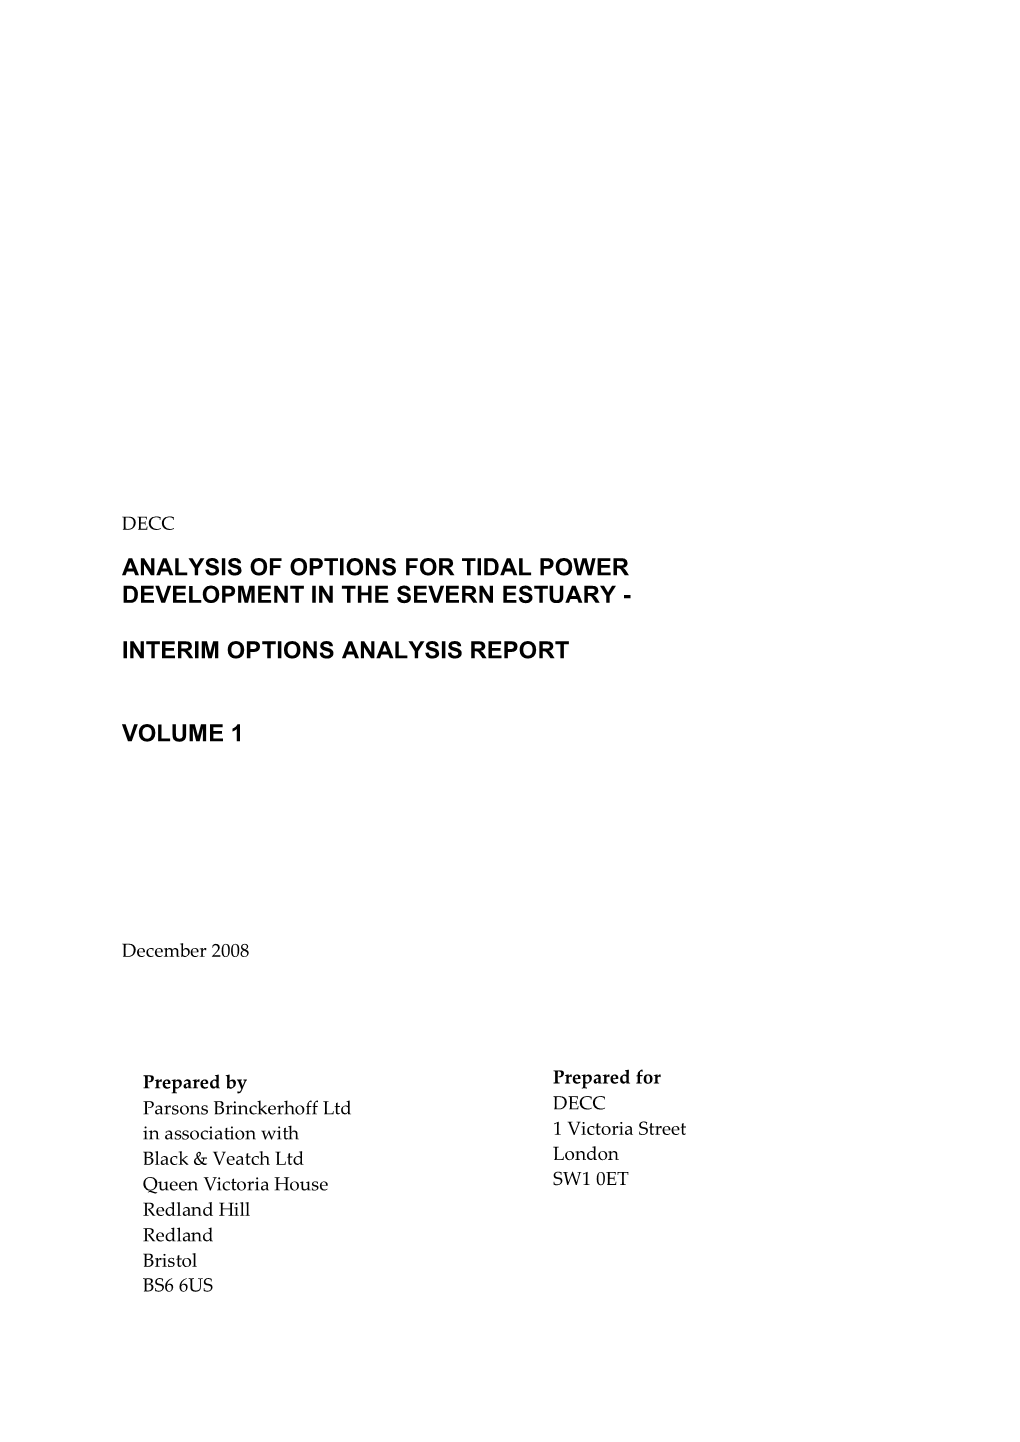 Analysis of Options for Tidal Power Development in the Severn Estuary